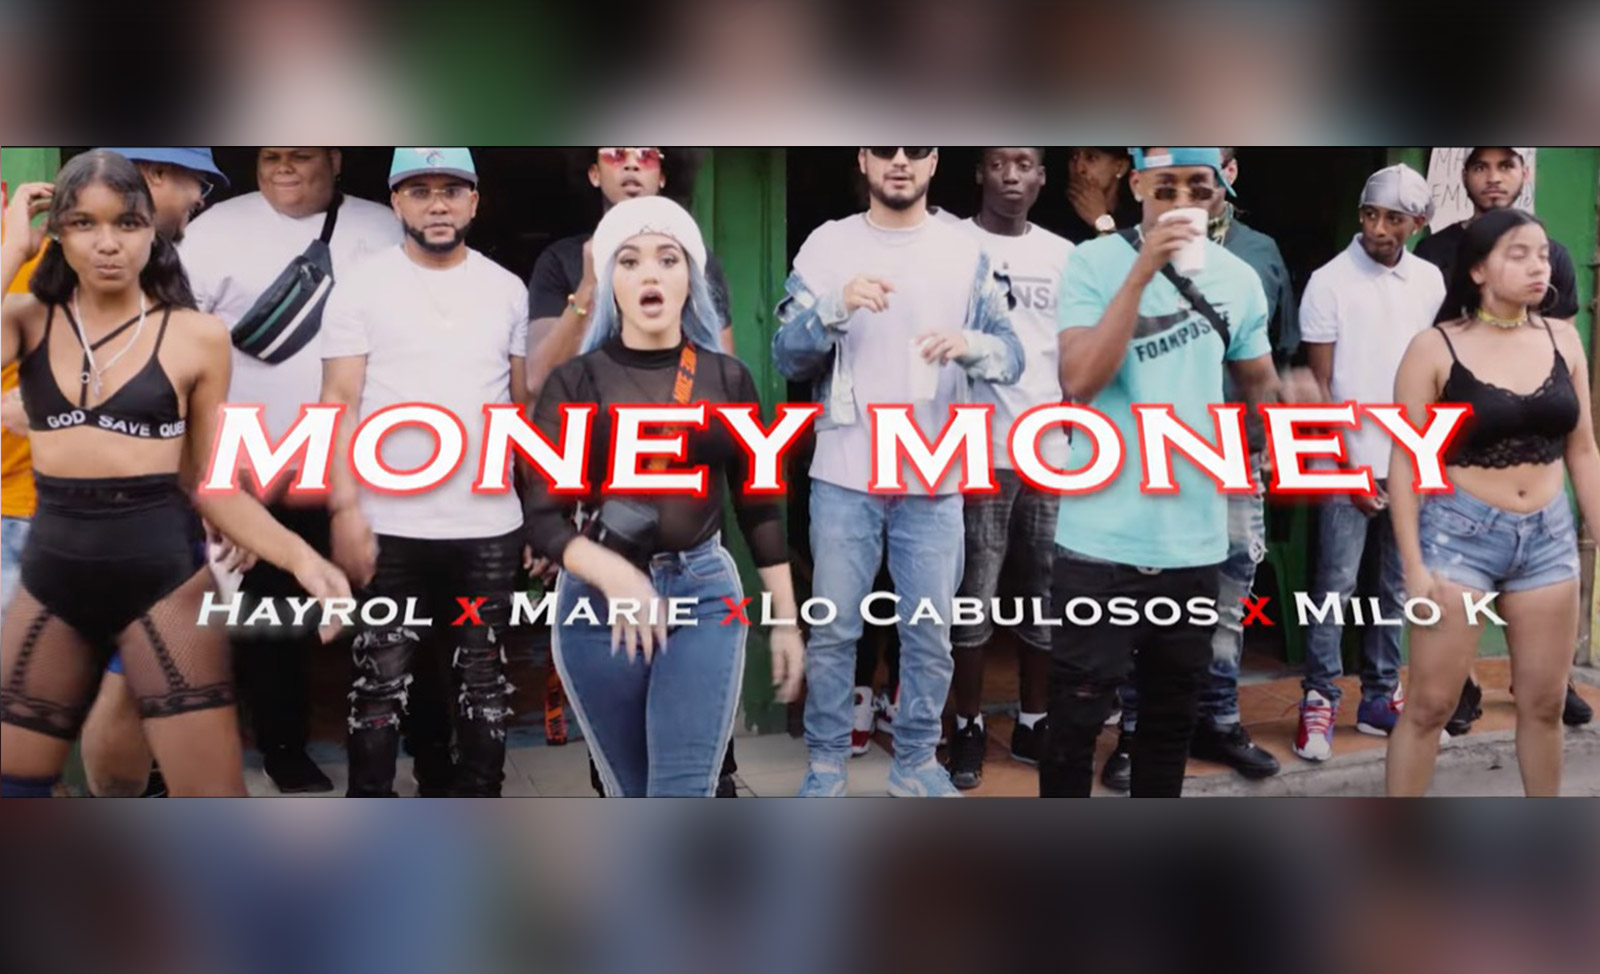 MARIE demuestra su flow de calle  en el video “Money Money”.